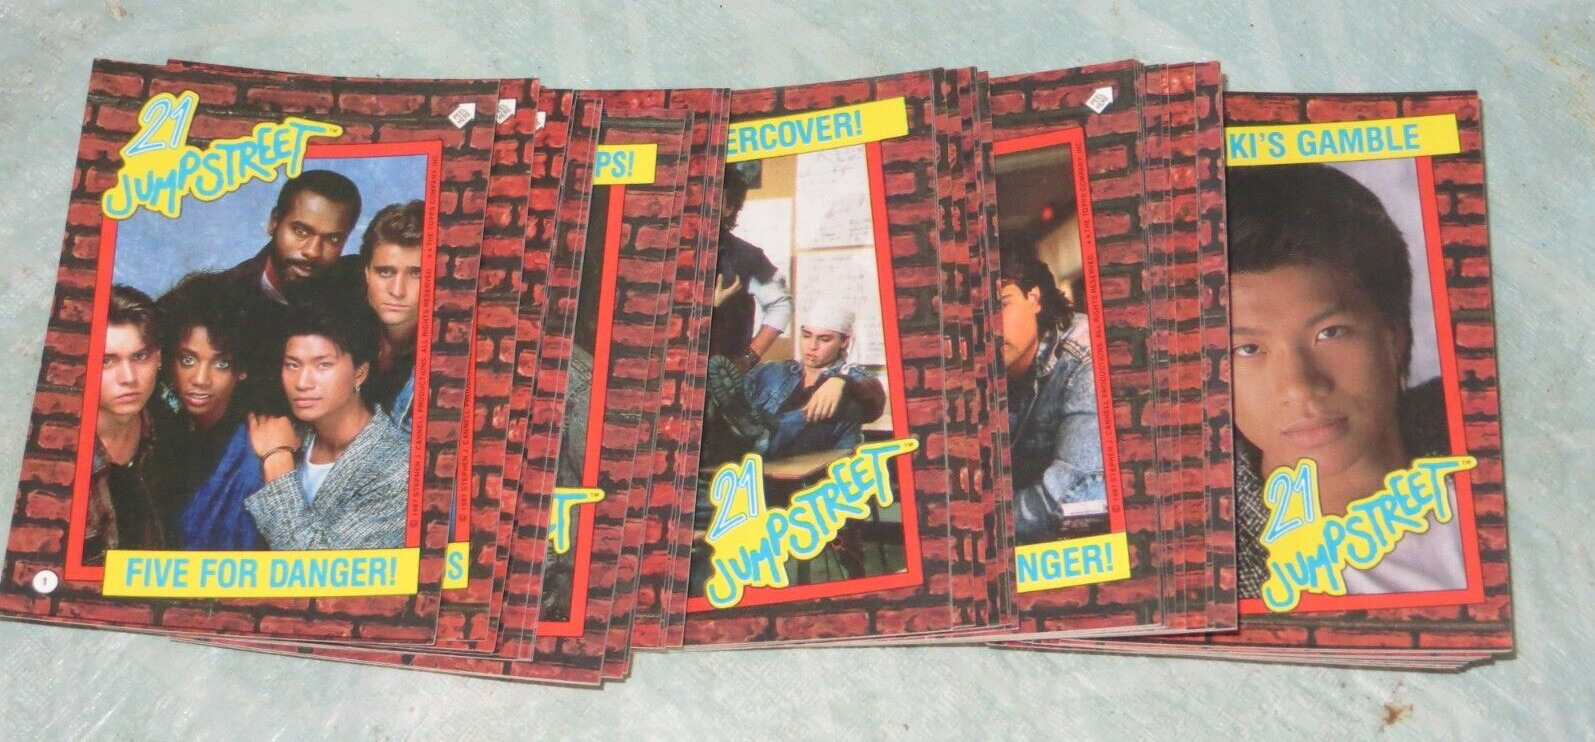 1987 Vintage 21 Jump Street TV Show 44 card sticker set